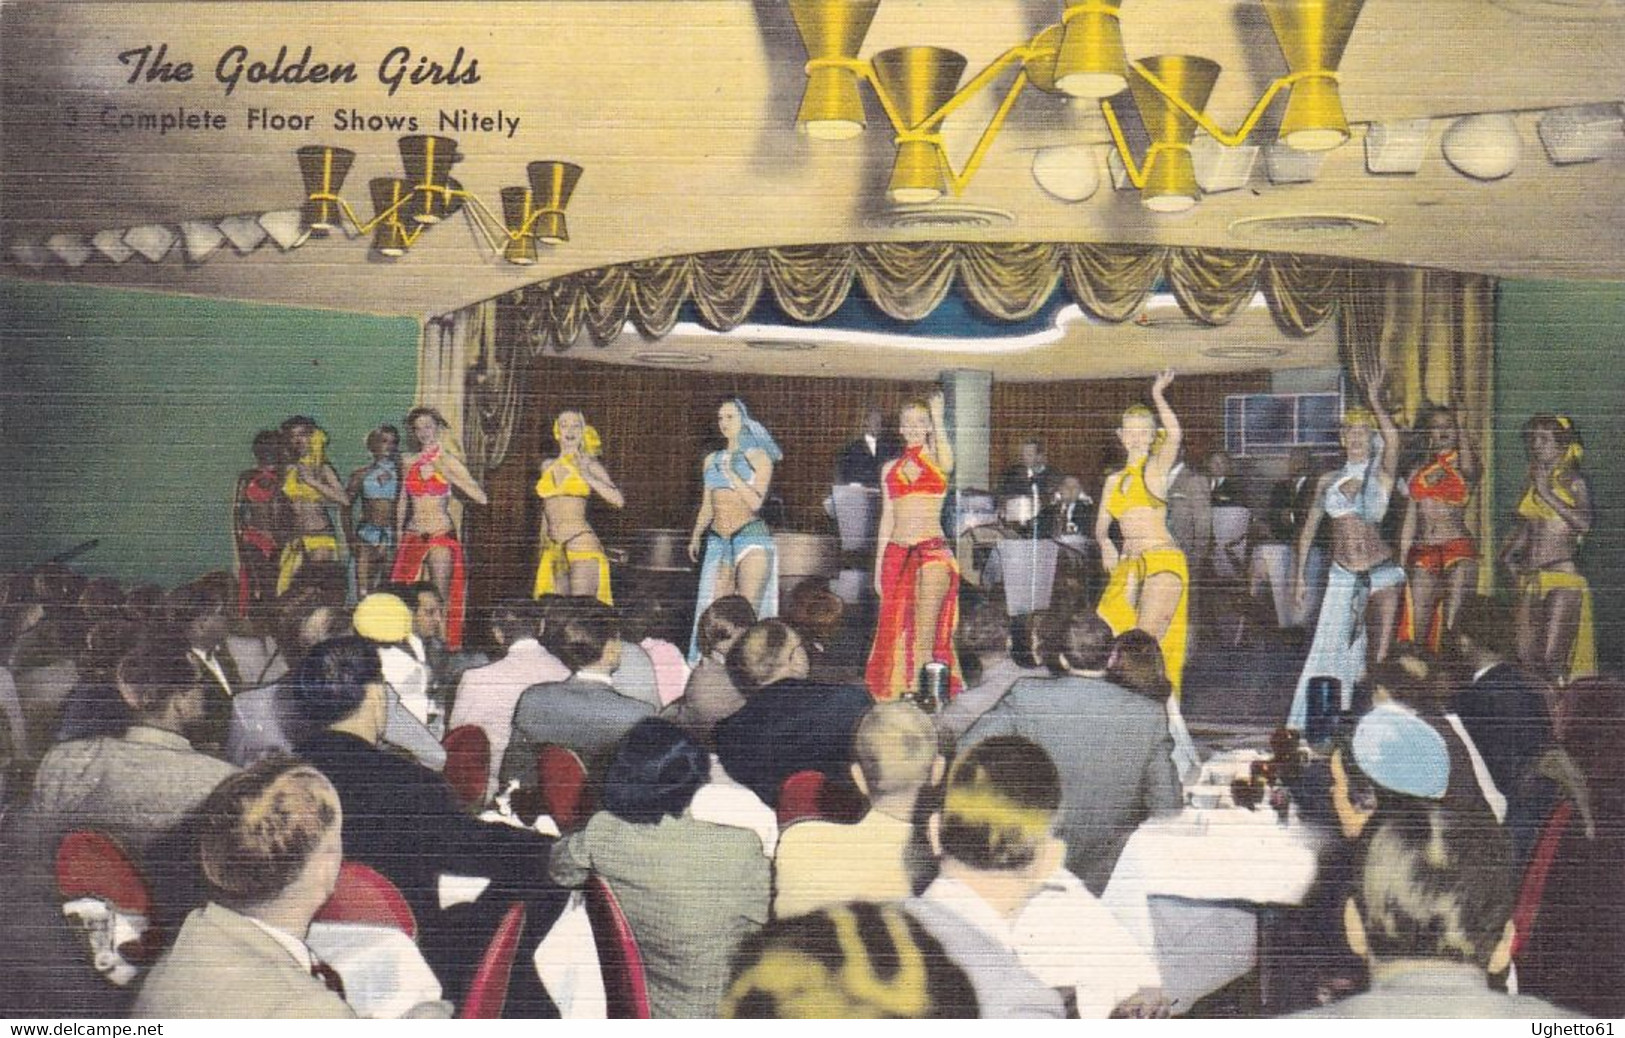 The Golden Girls Nightly Floor Show, Golden Bank Casino, Reno, Nevada, USA - Reno